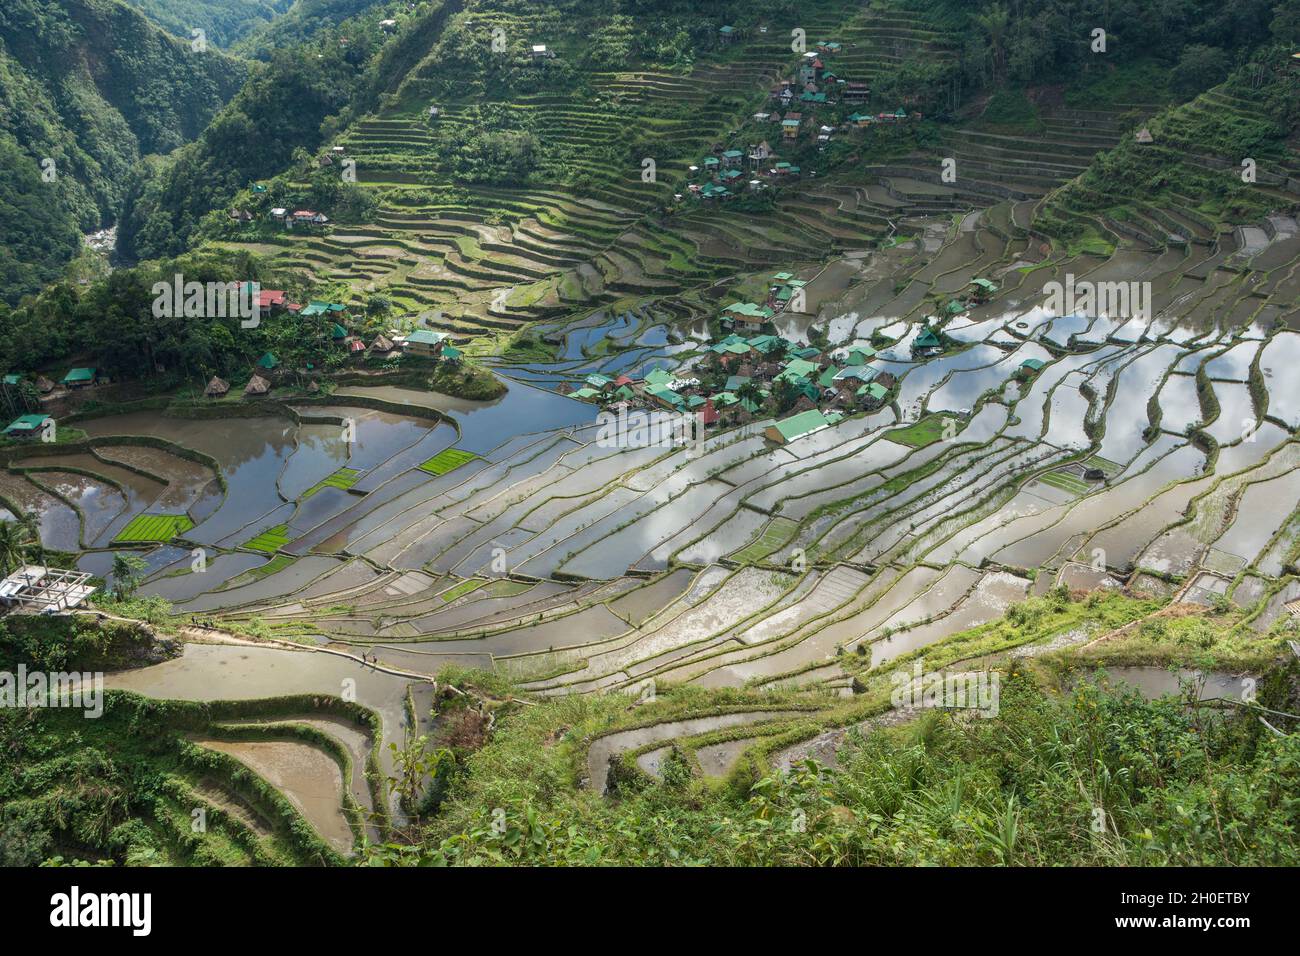 Overview of the Batad rice terraces near Banaue, Ifugao province, Philippines Stock Photo